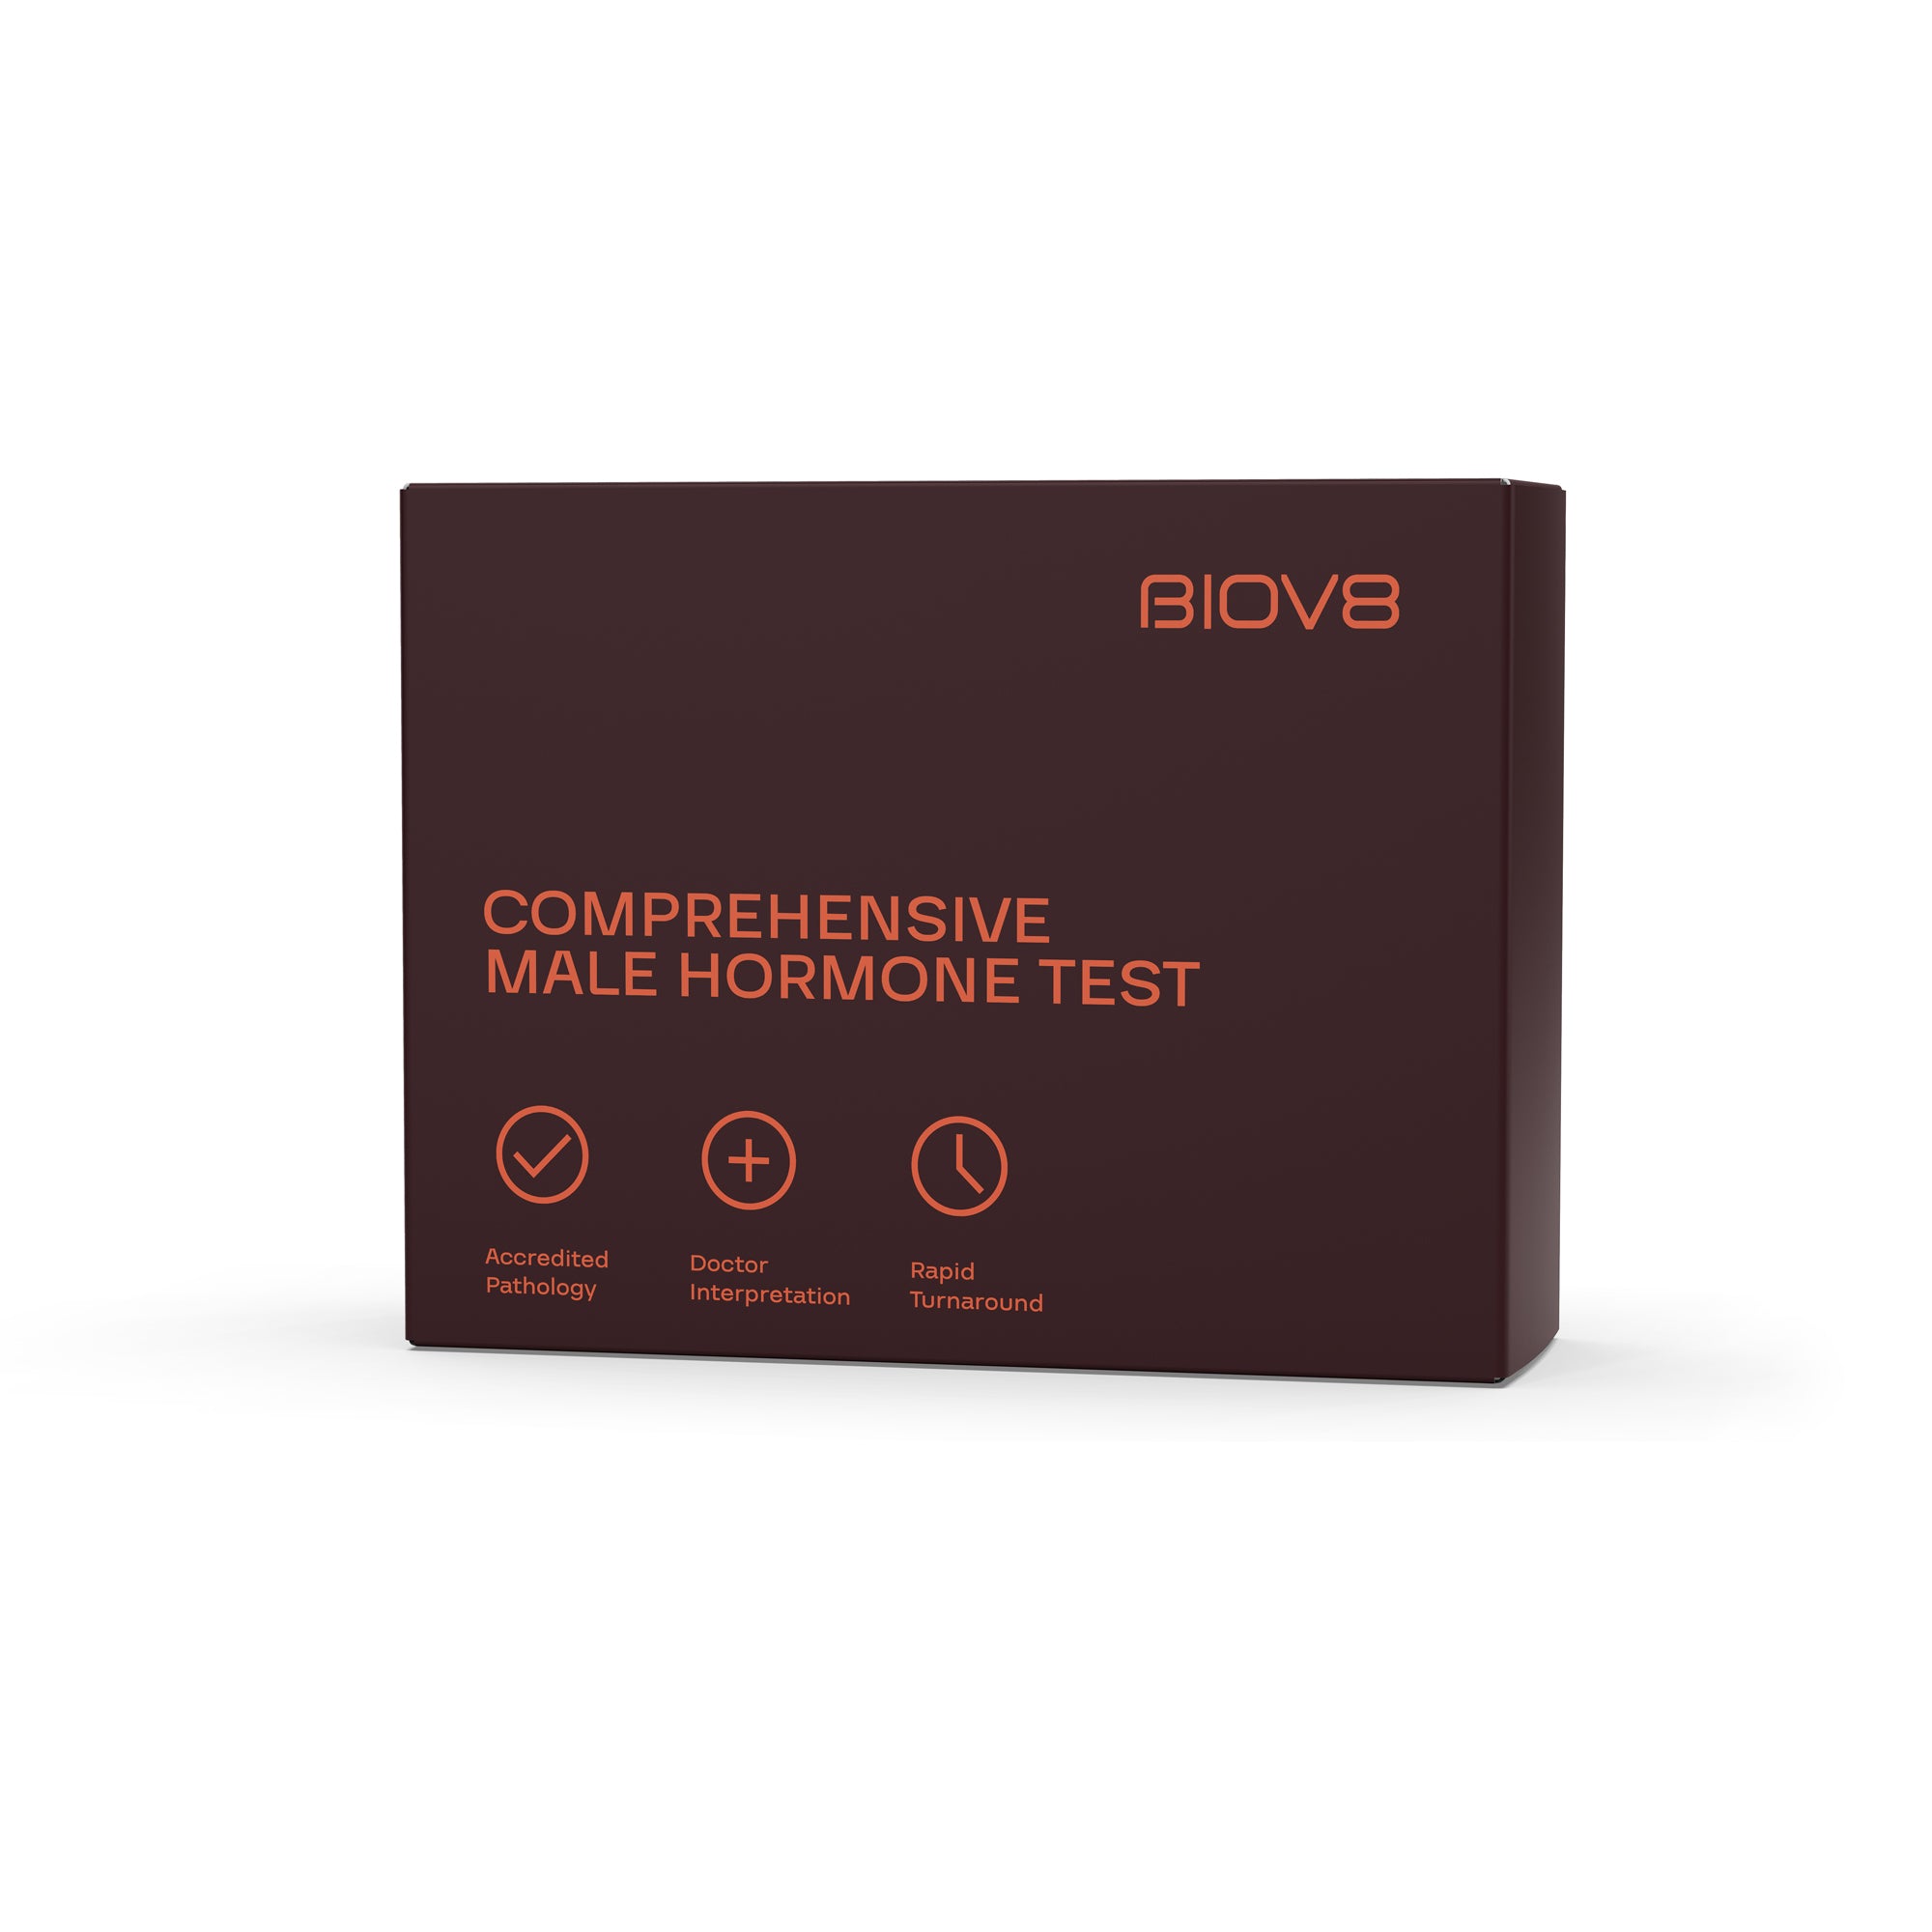 Biov8's Comprehensive Male Hormone Assessment kit